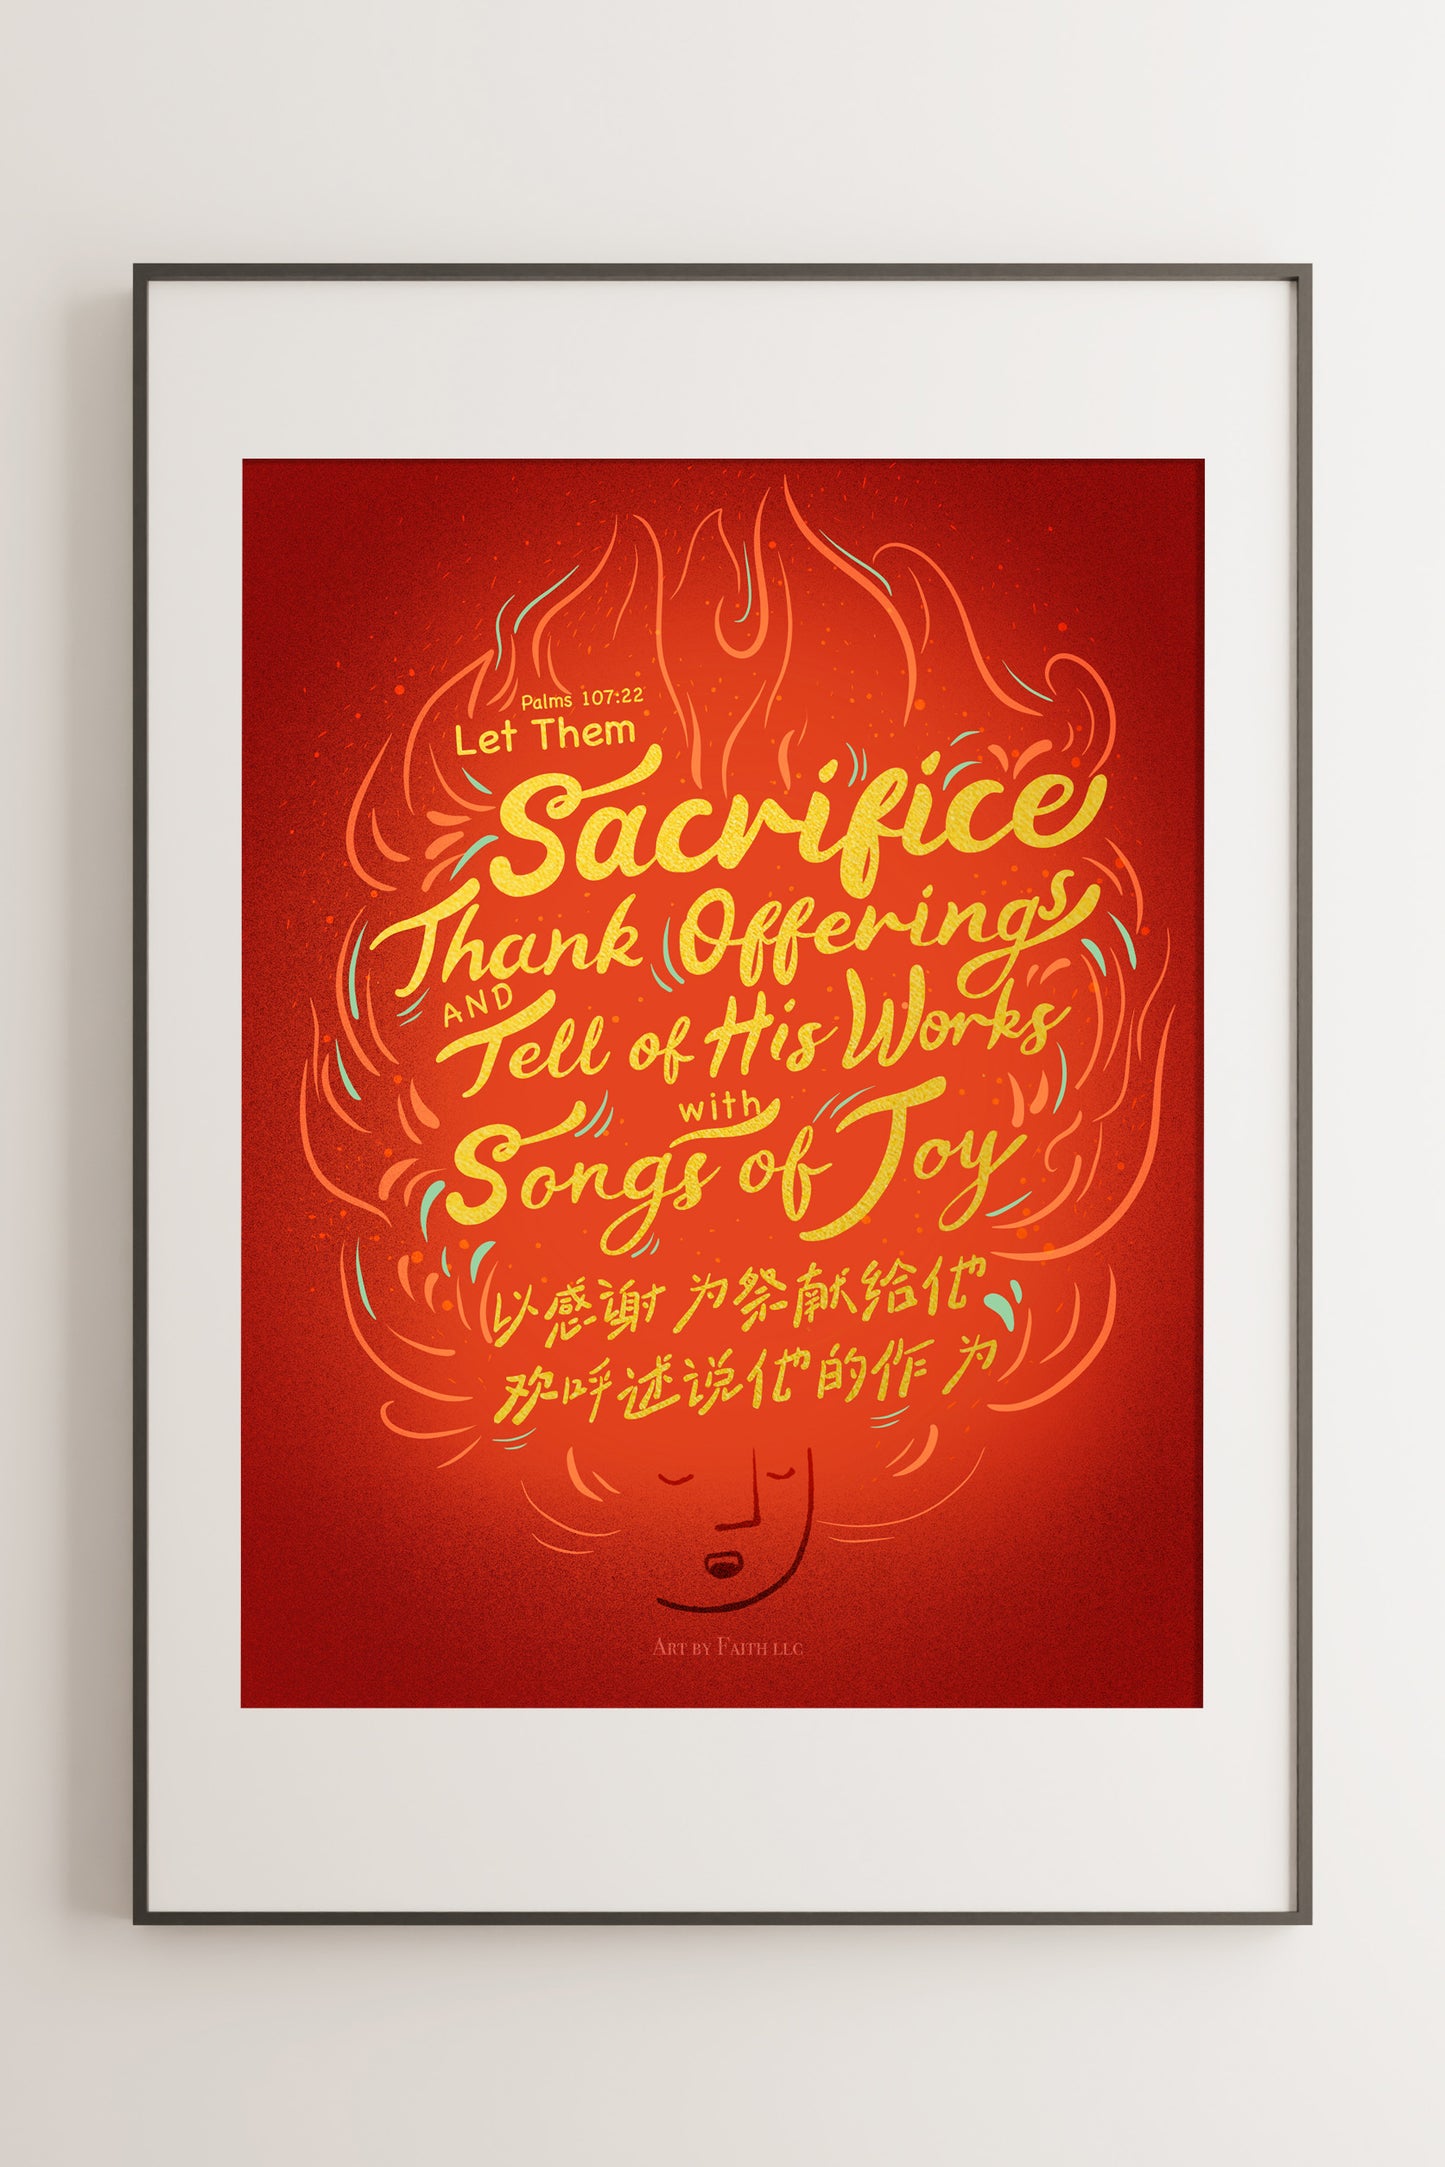 Art Print-Sacrifice Thank offerings